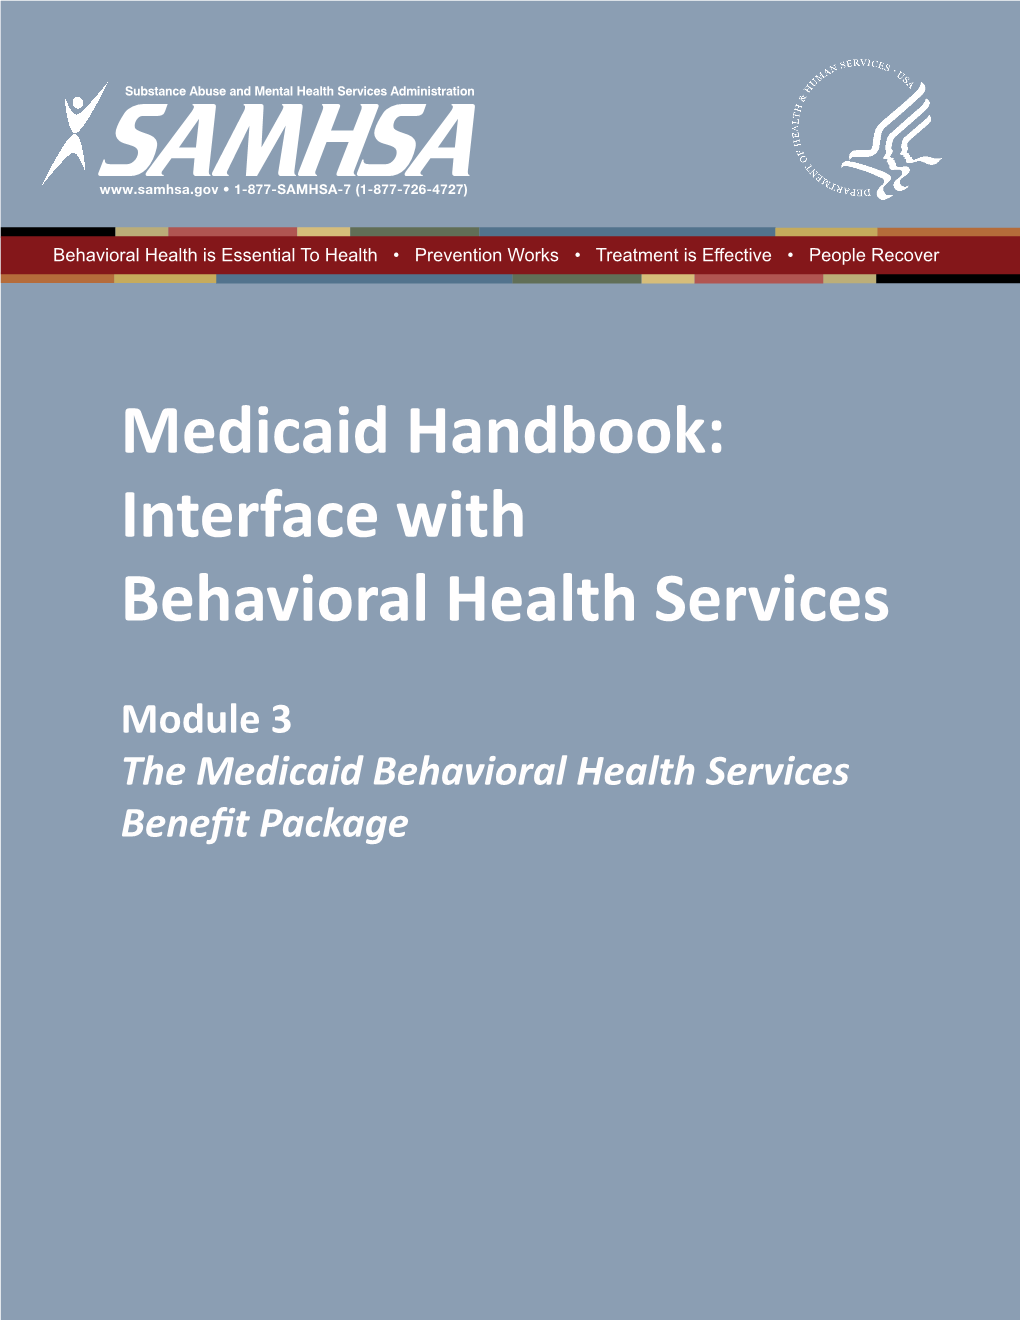 Medicaid Handbook: Interface with Behavioral Health Services